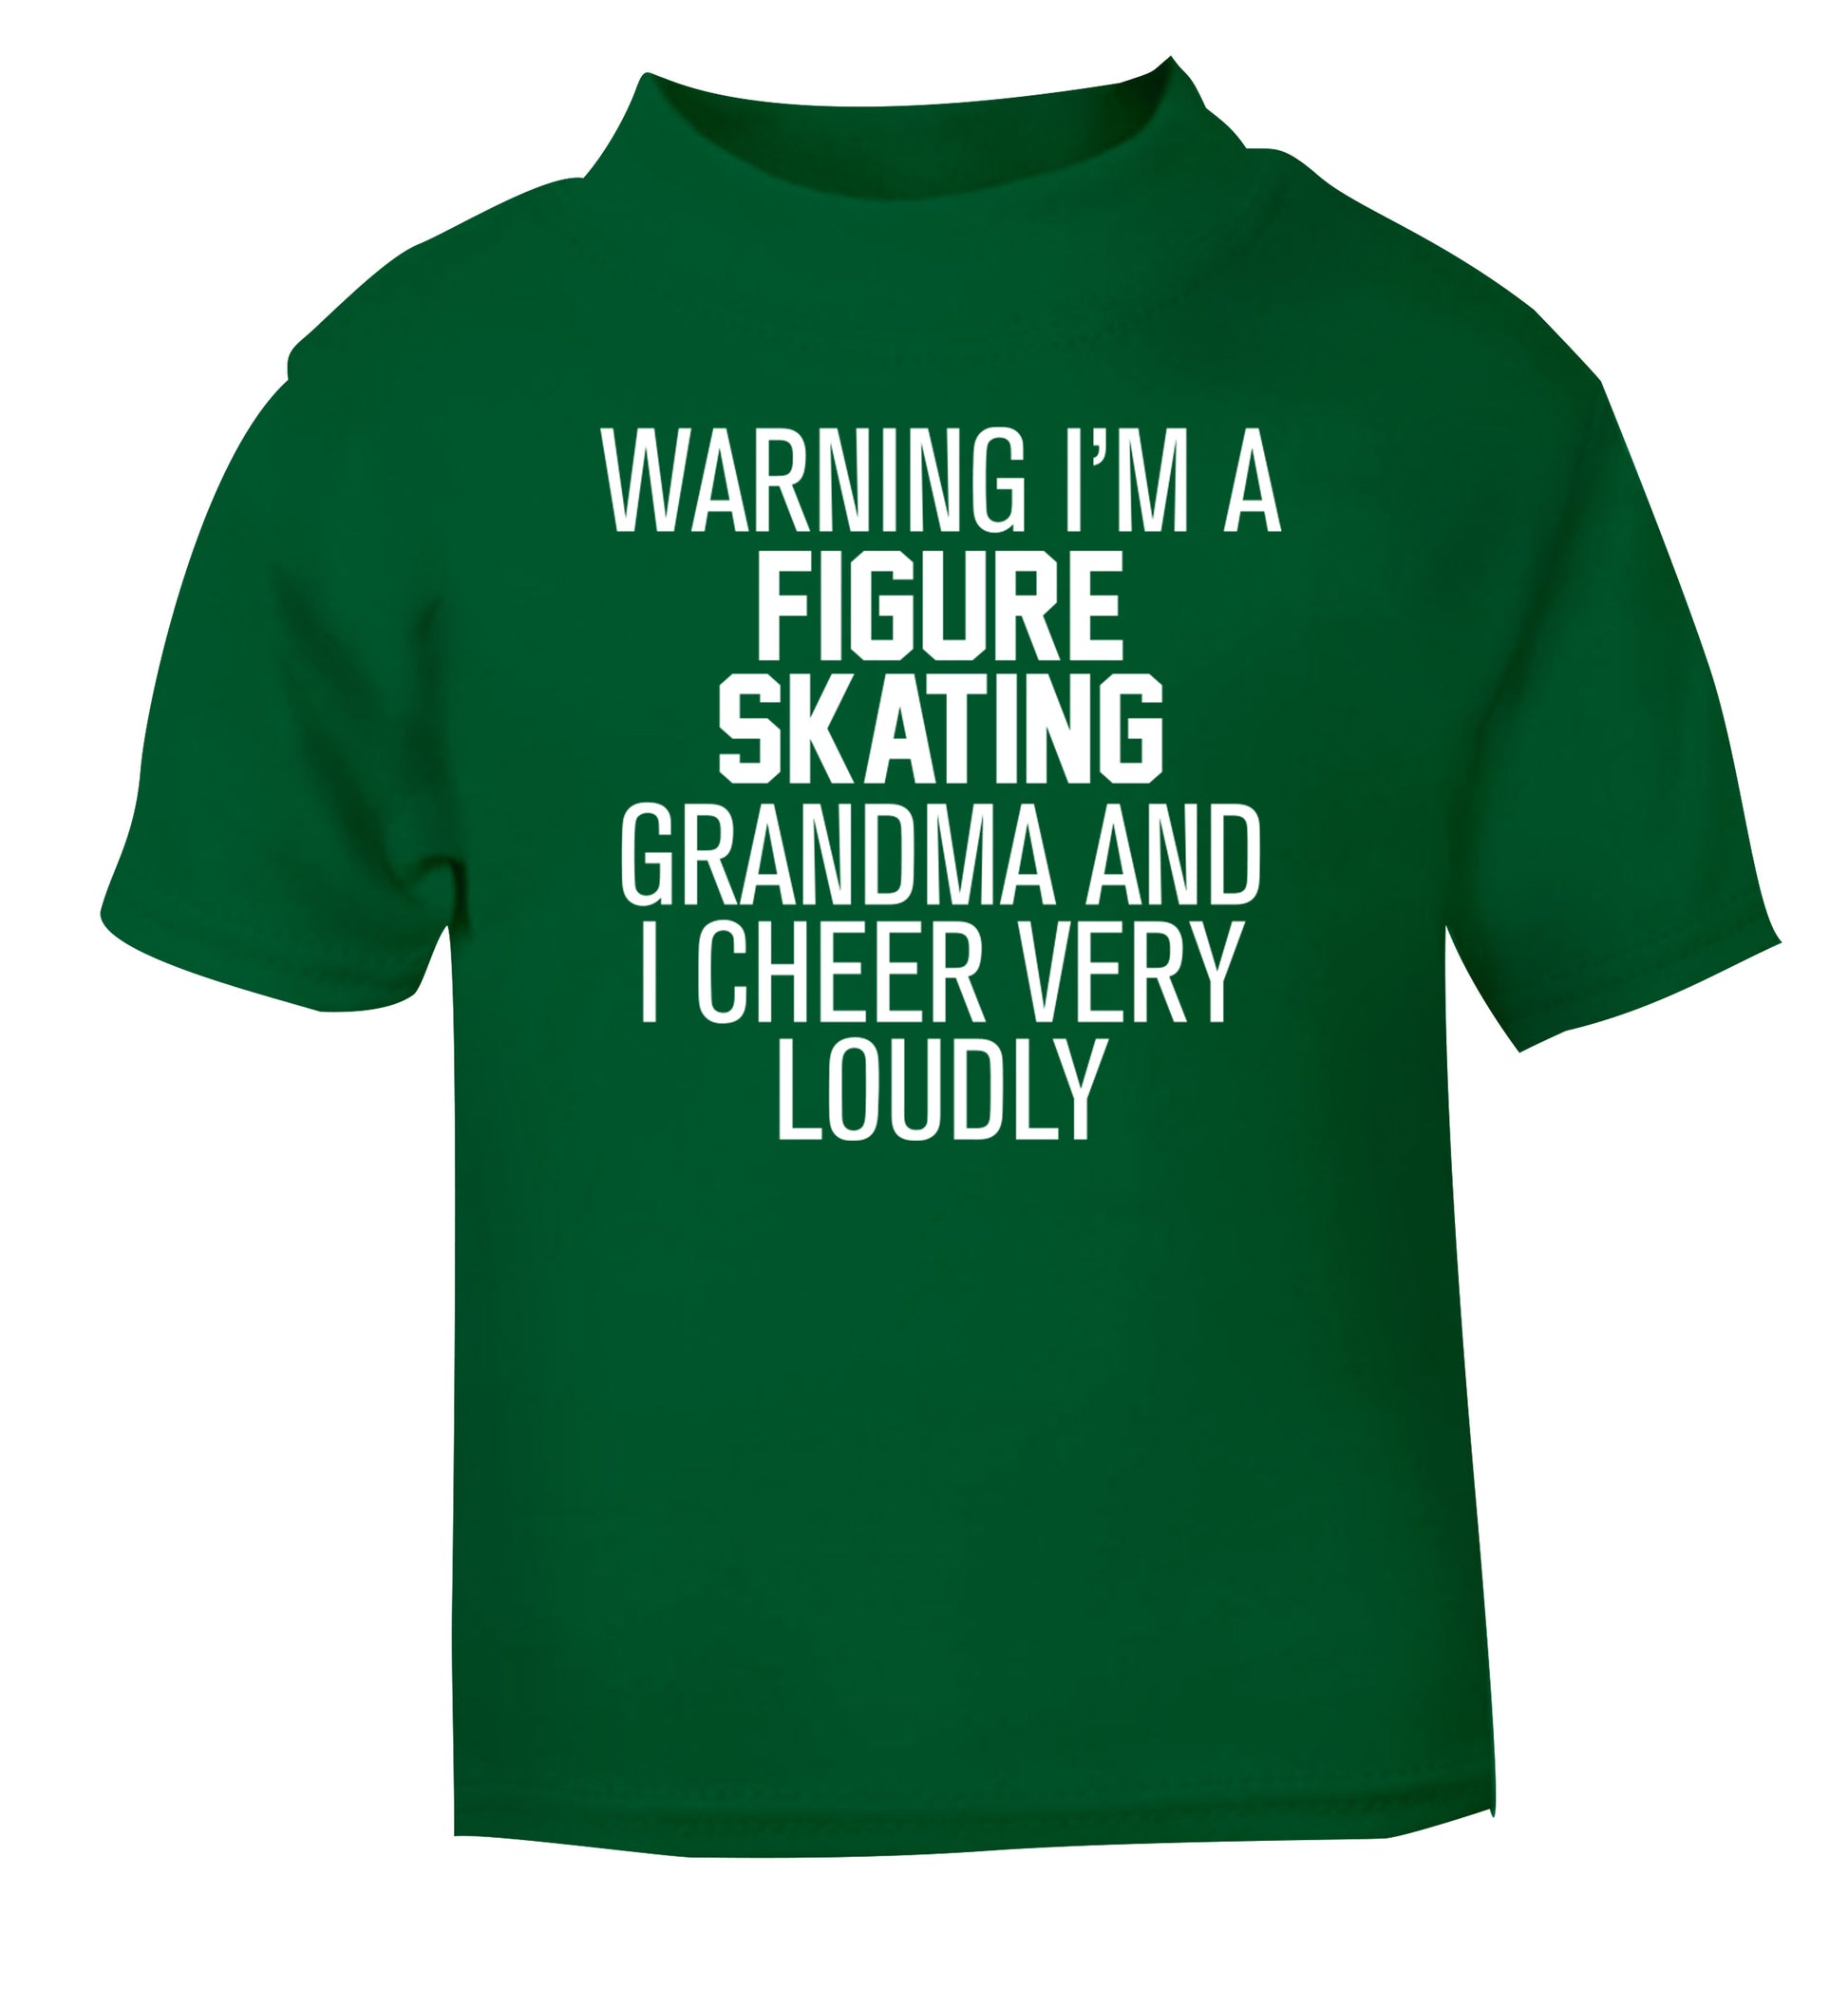 Warning I'm a figure skating grandma and I cheer very loudly green Baby Toddler Tshirt 2 Years